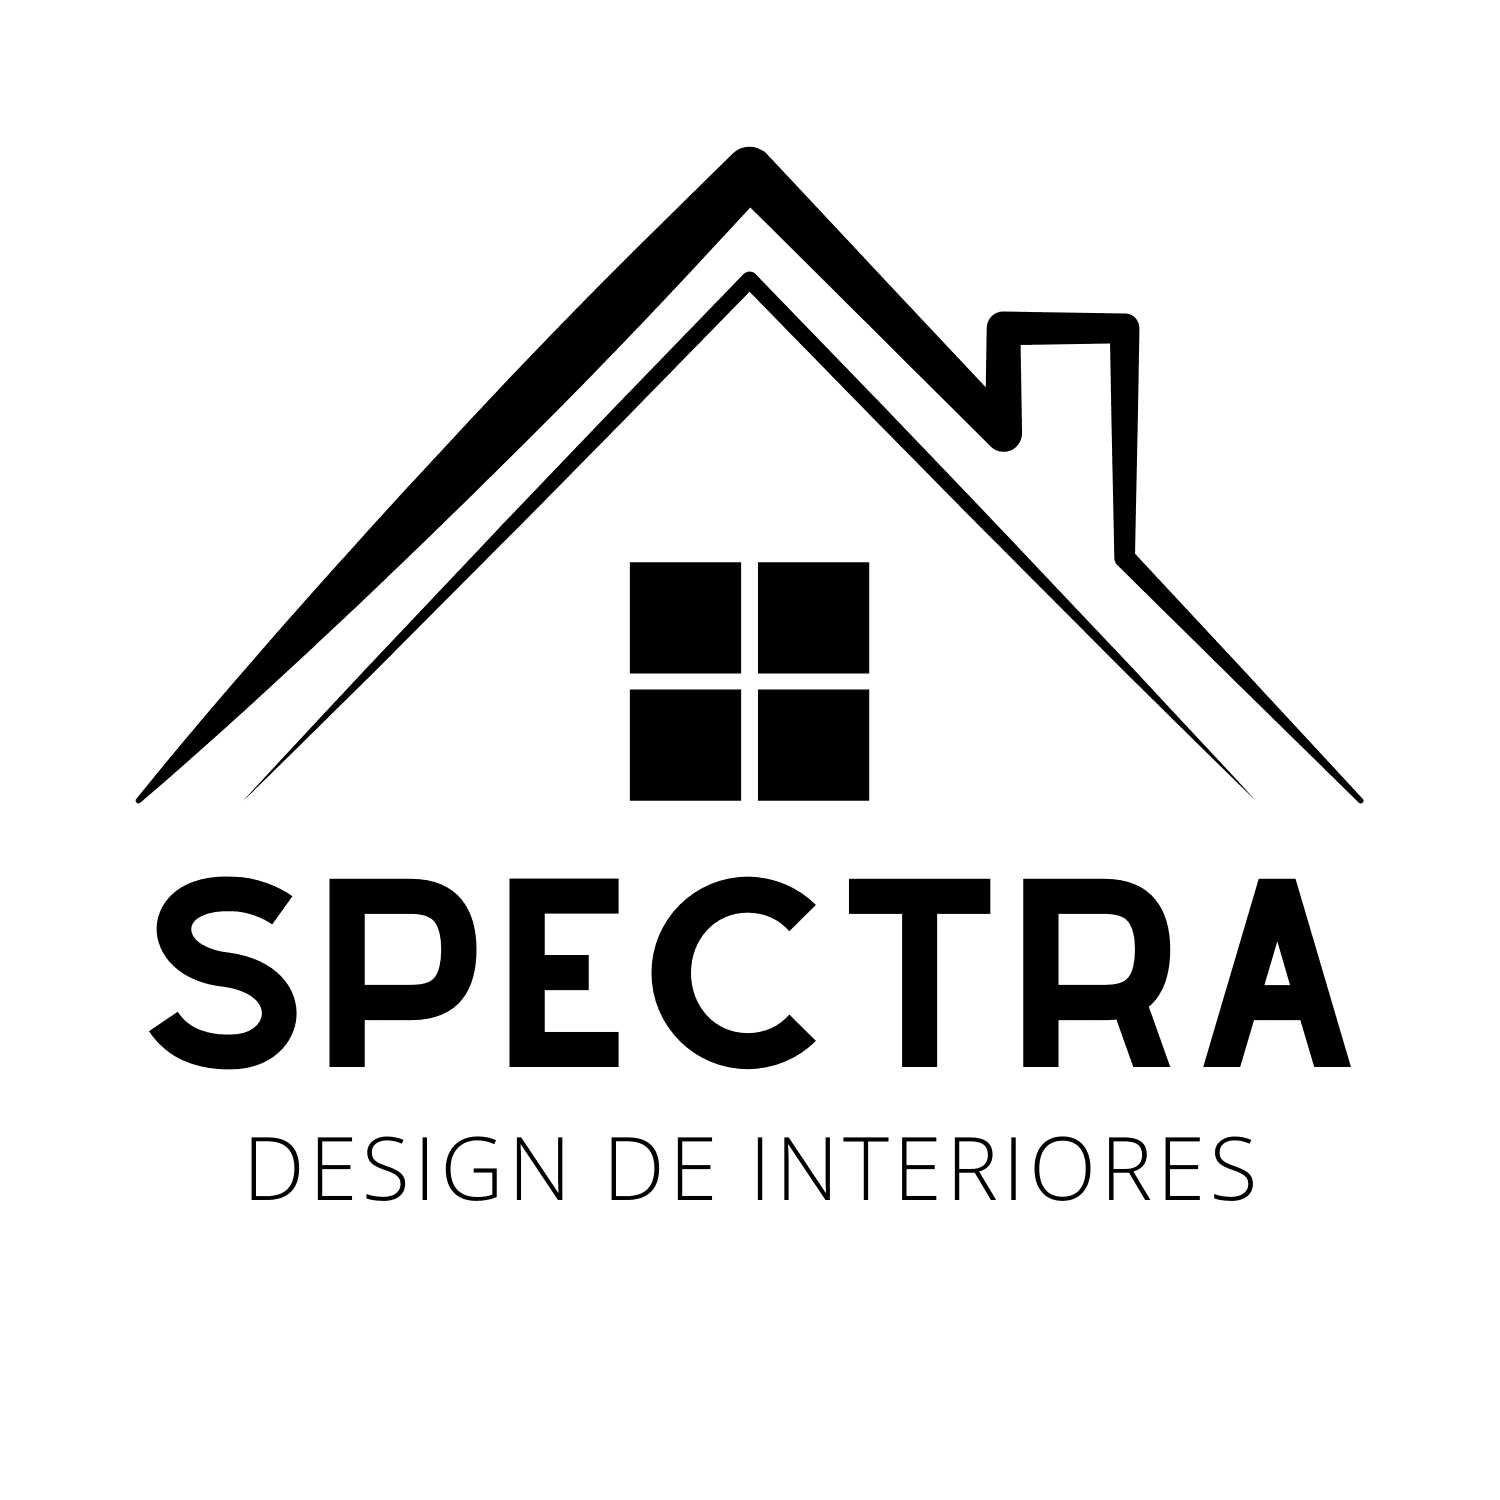 Spectra Design de Interiores